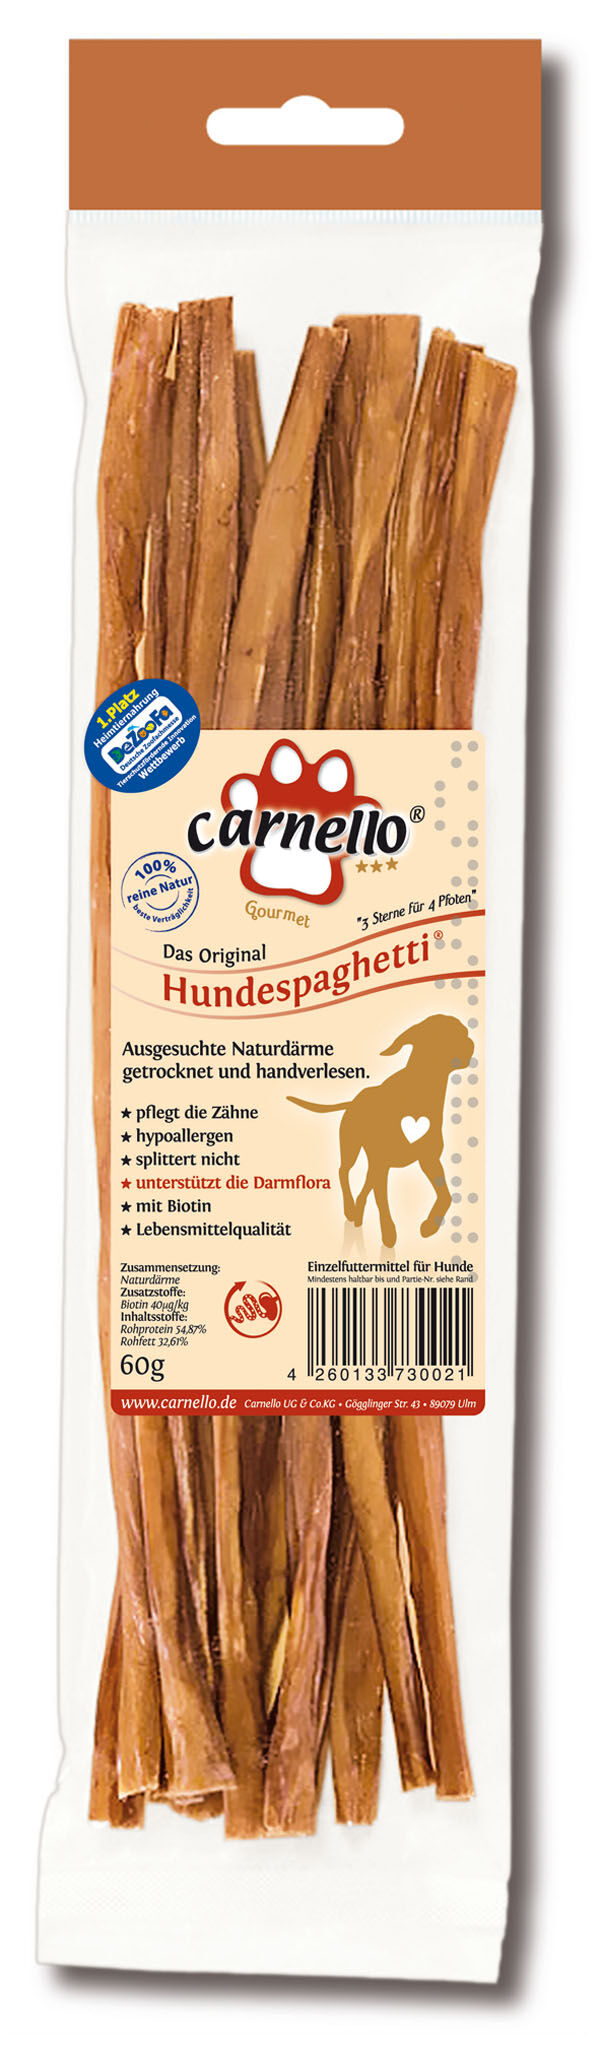 carnello-Hundespaghetti-schweinedarm-biotin-kauartikel-DI-599